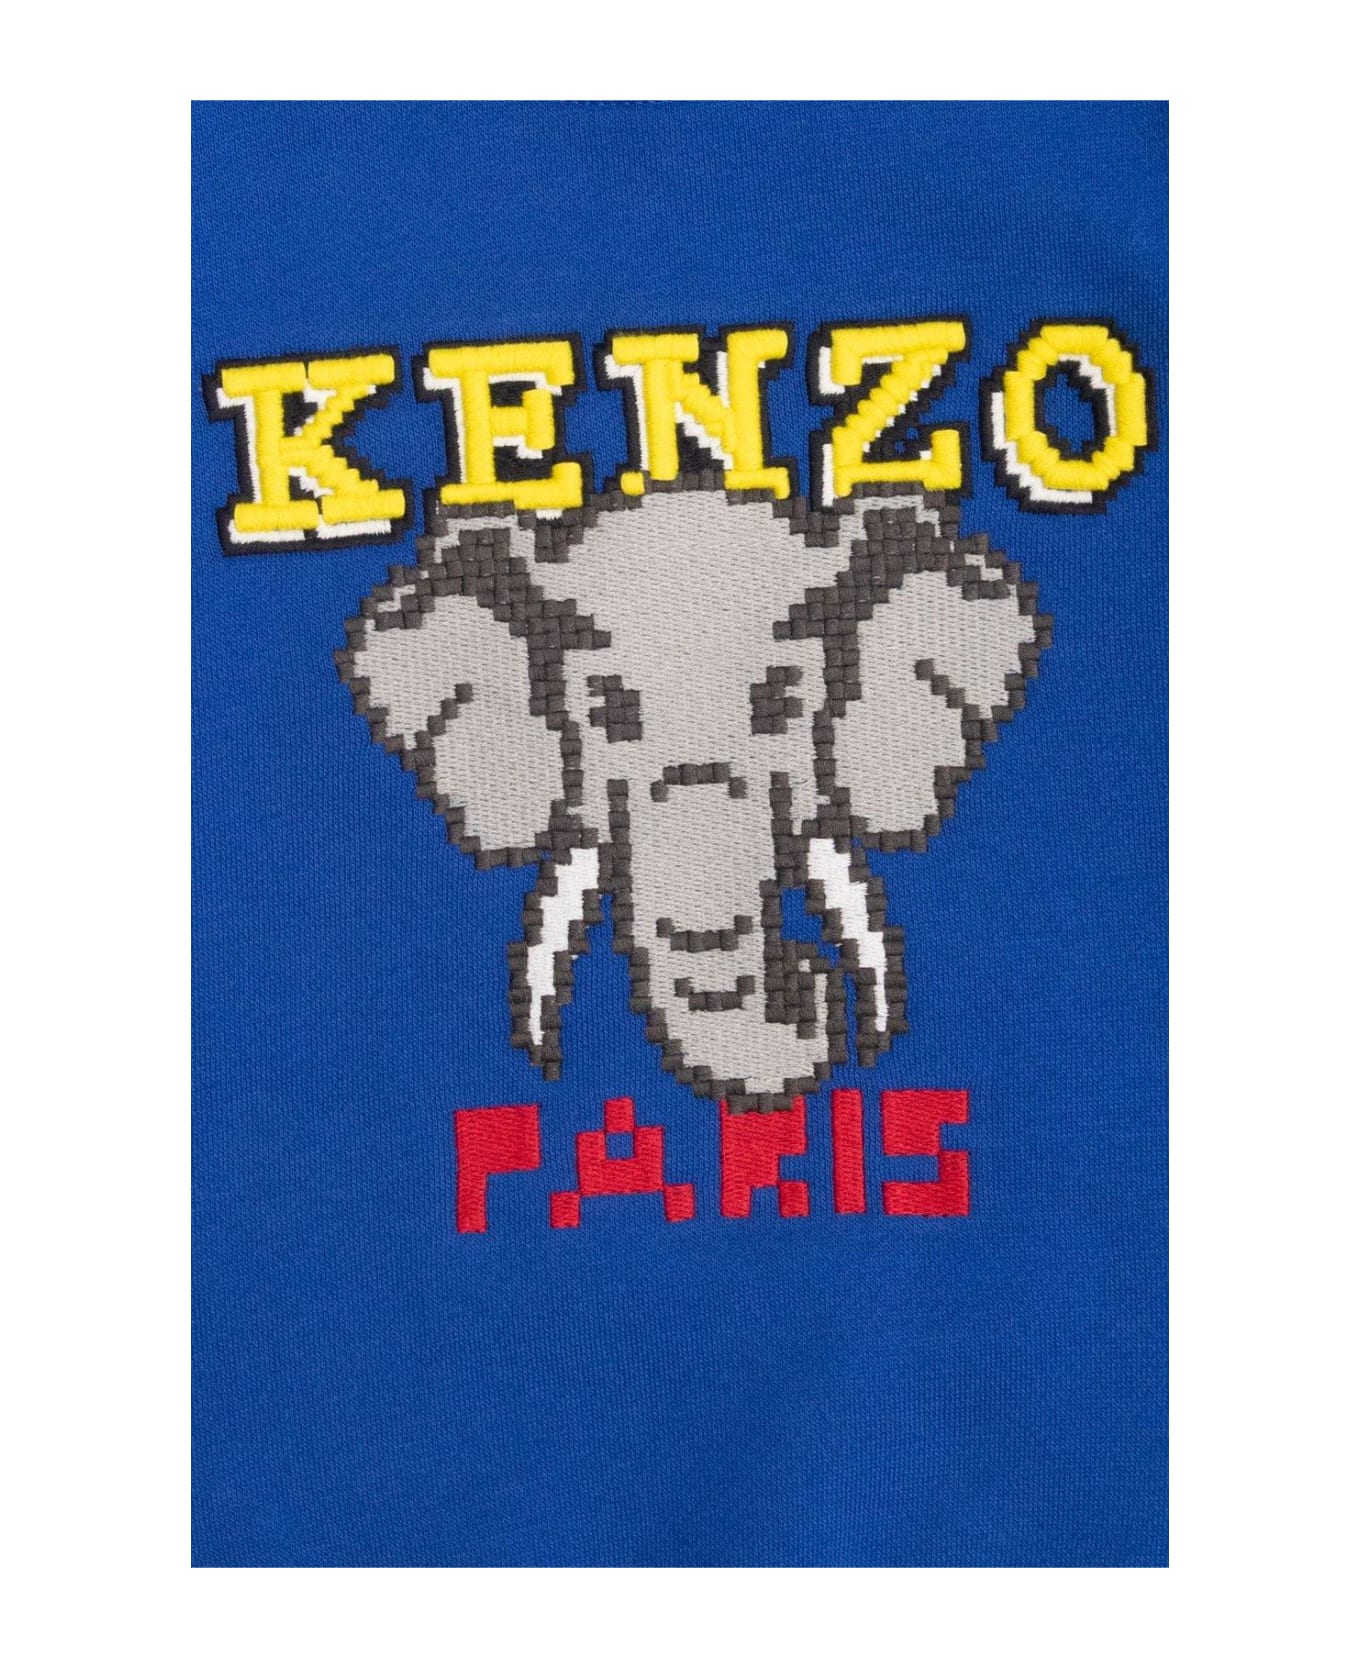 Kenzo Kids Jungle Game Elephant Crewneck Sweatshirt - Blu ニットウェア＆スウェットシャツ